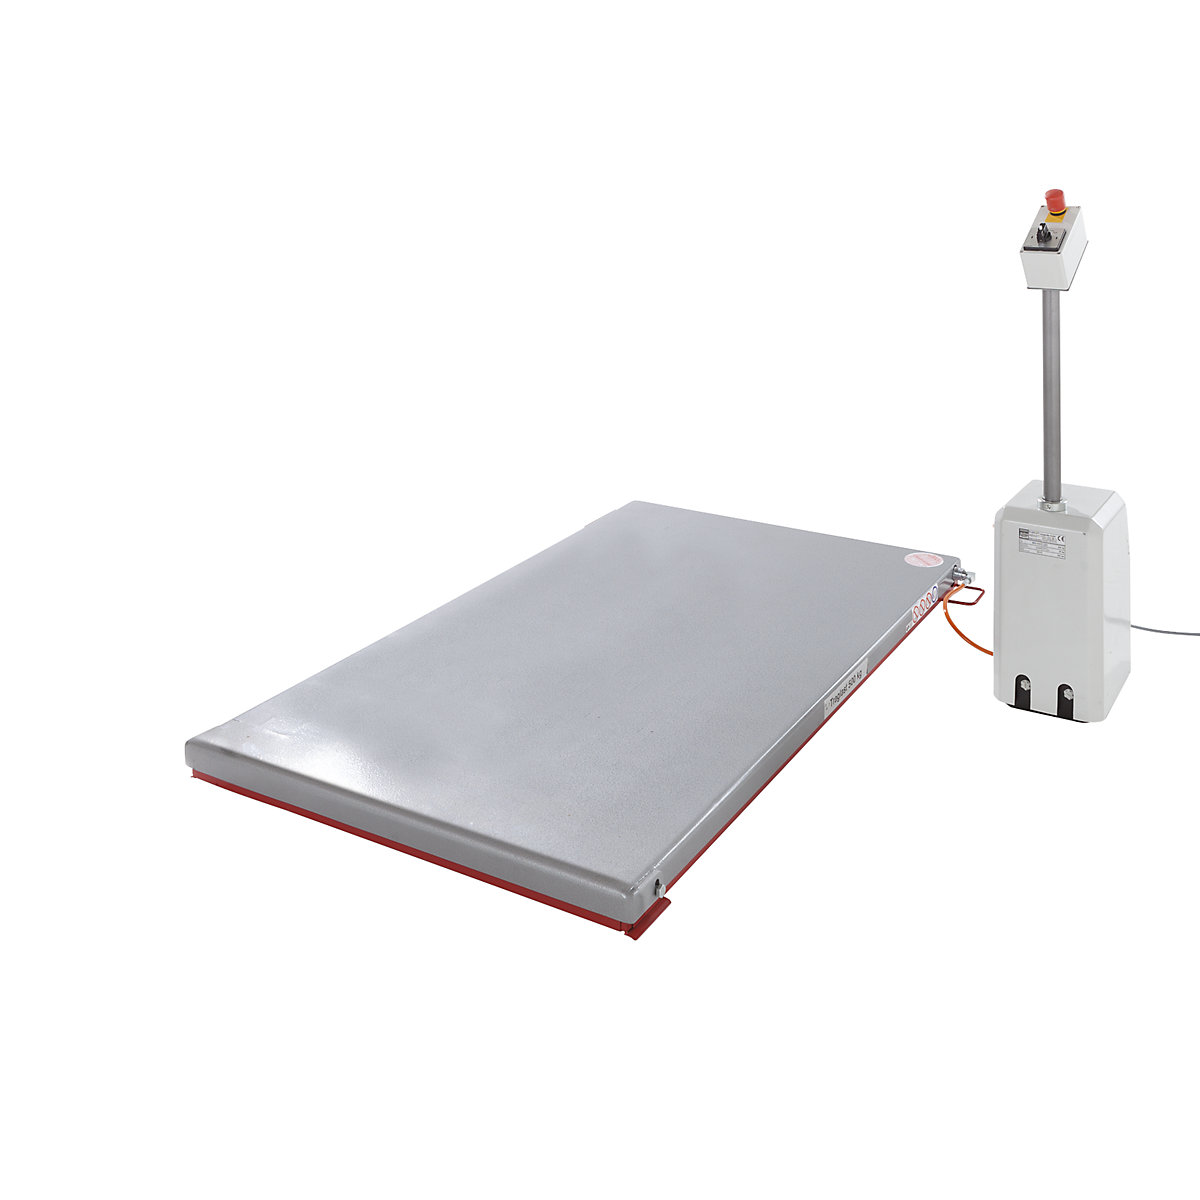 Low profile lift table, G series - Flexlift